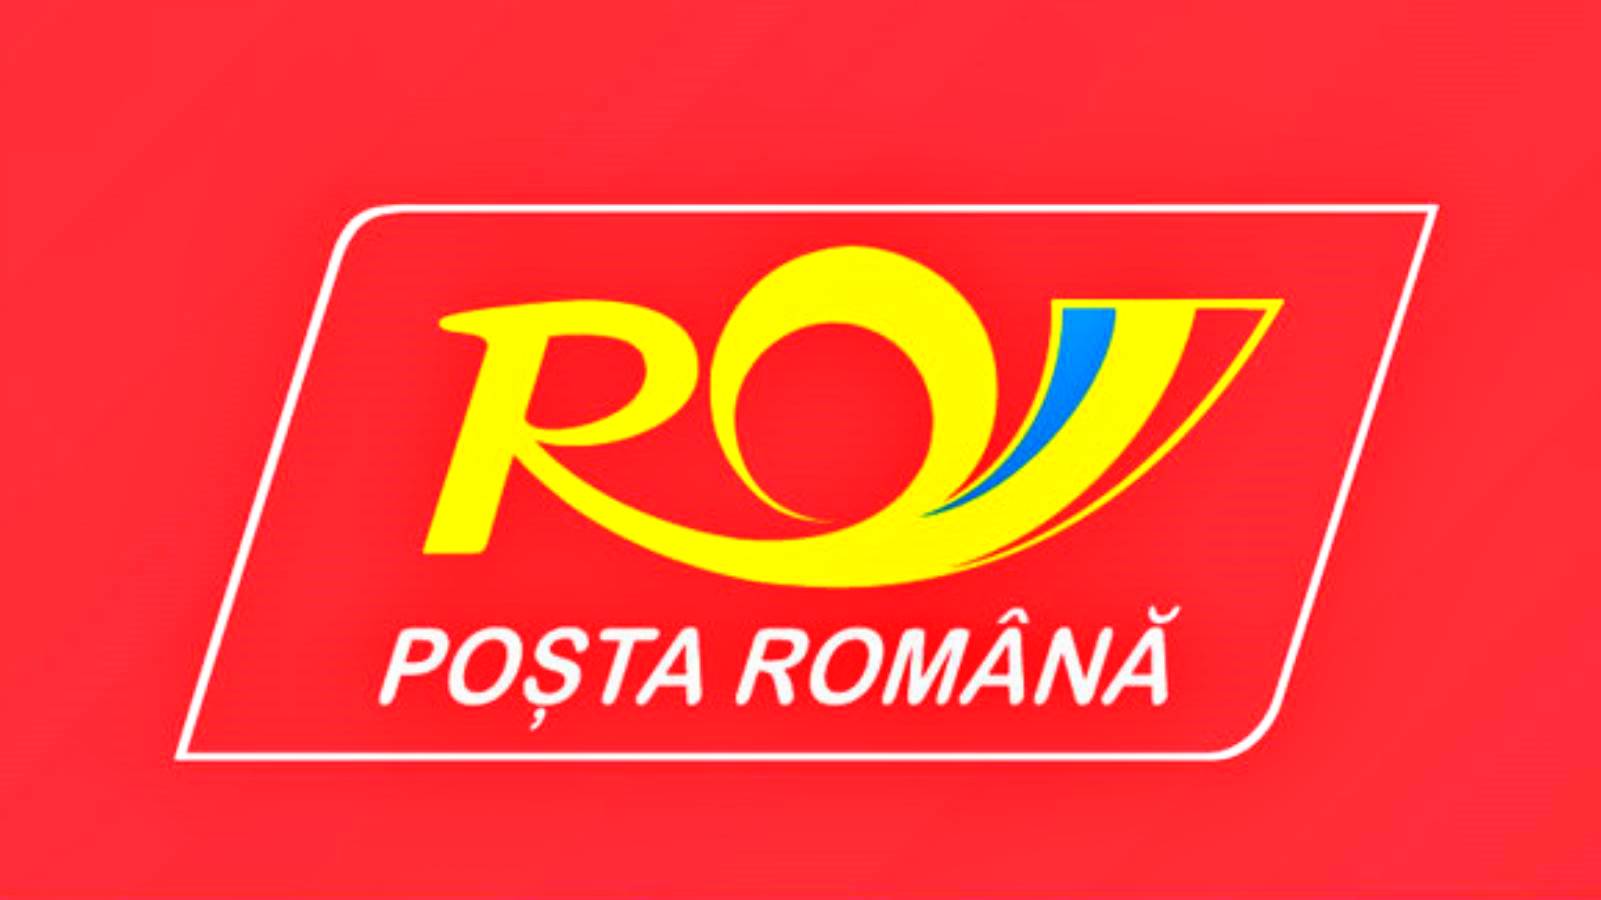 Romanian Postin modernisointi jatkuu Announcement Made Company